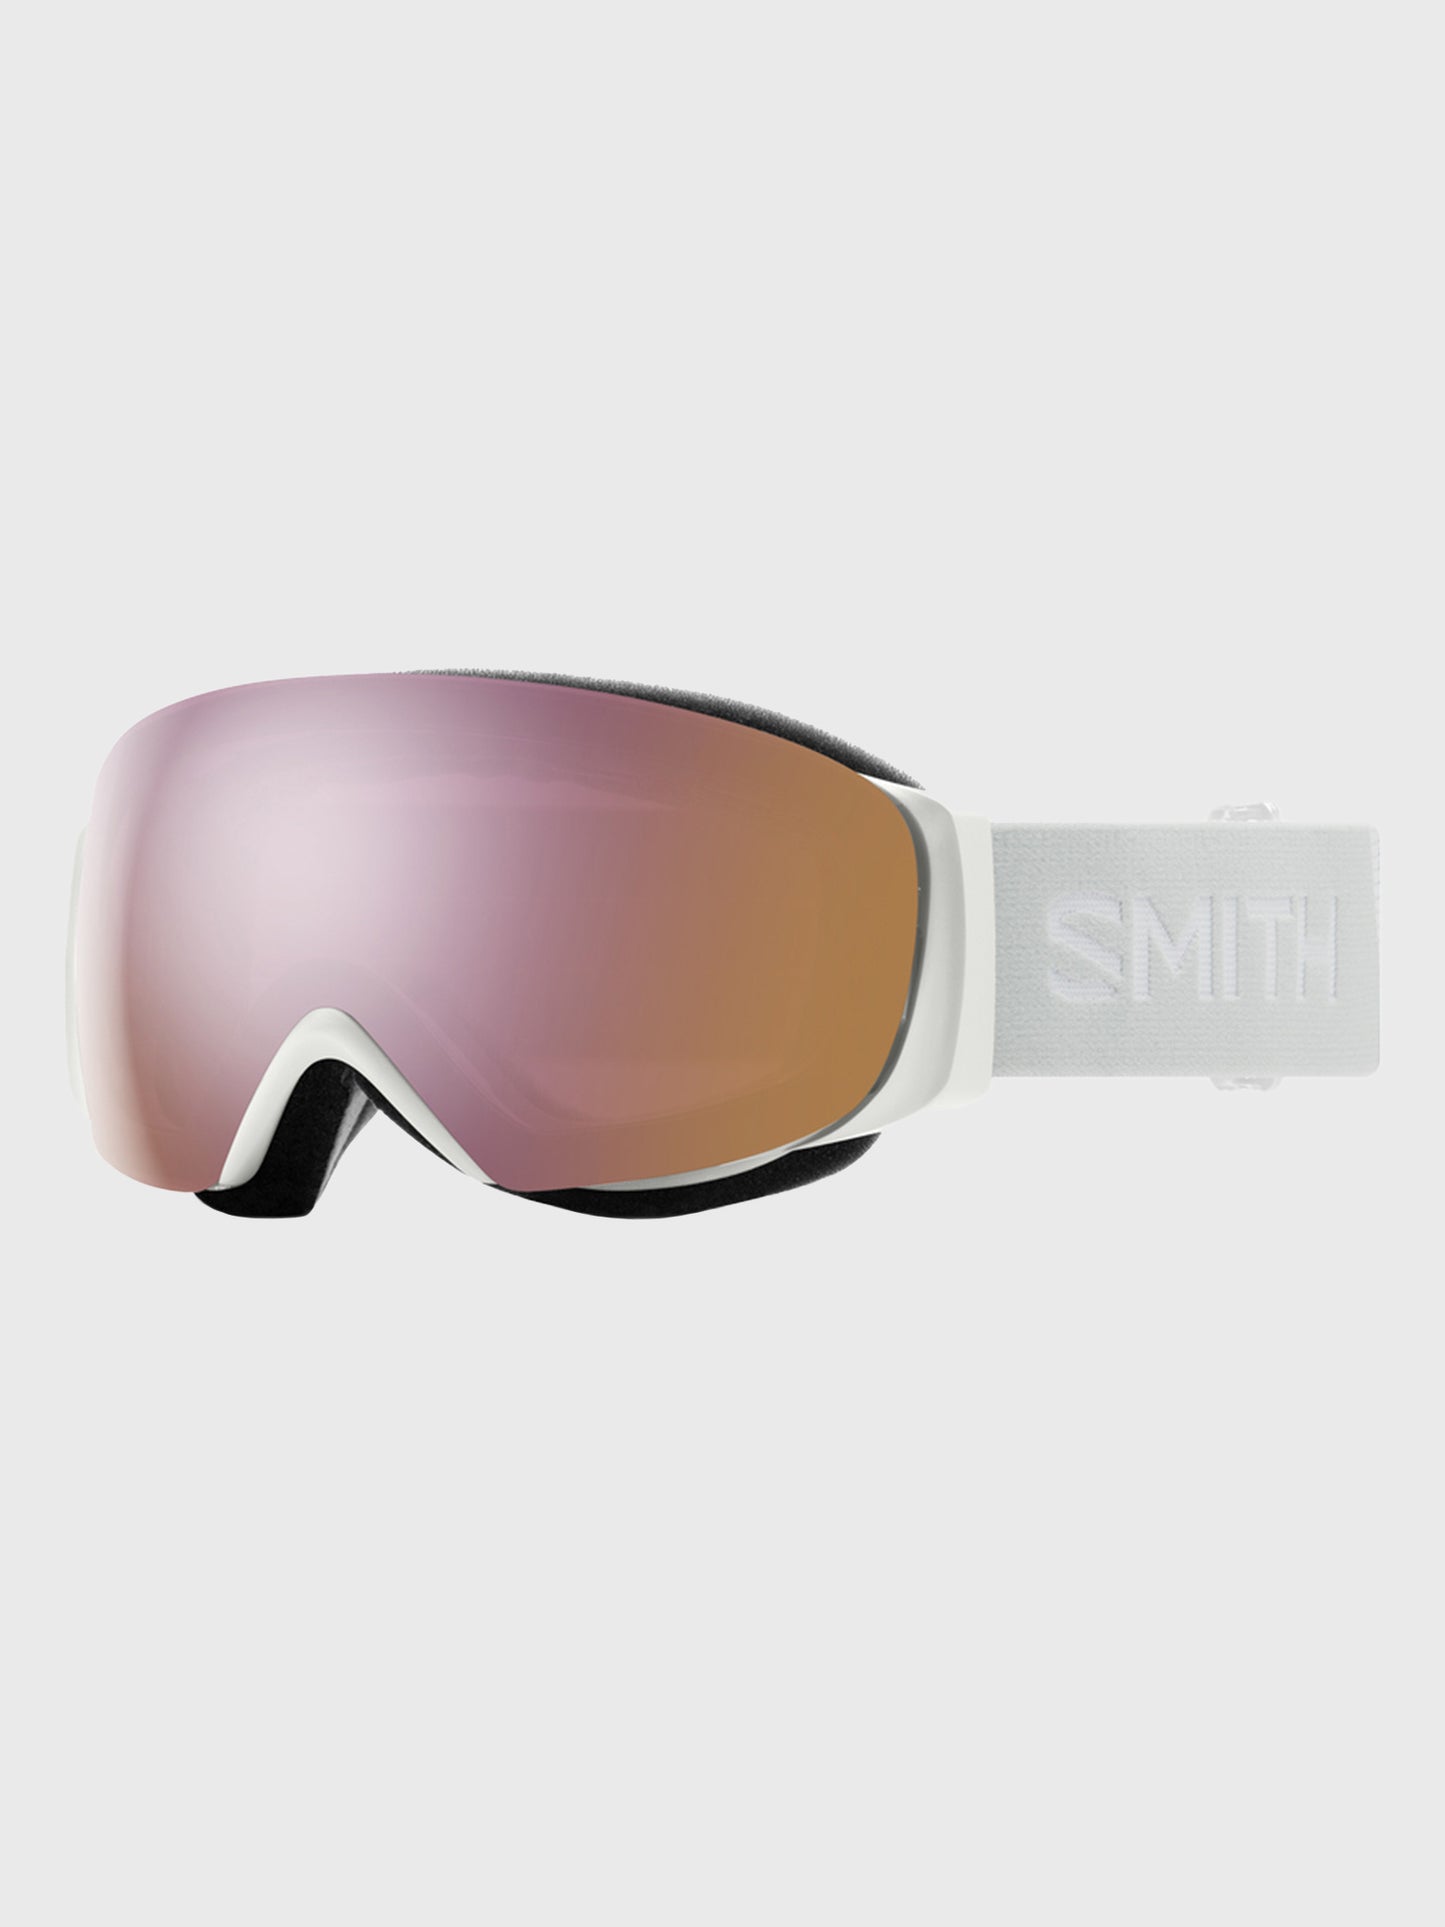 Smith I/O Mag S Goggles